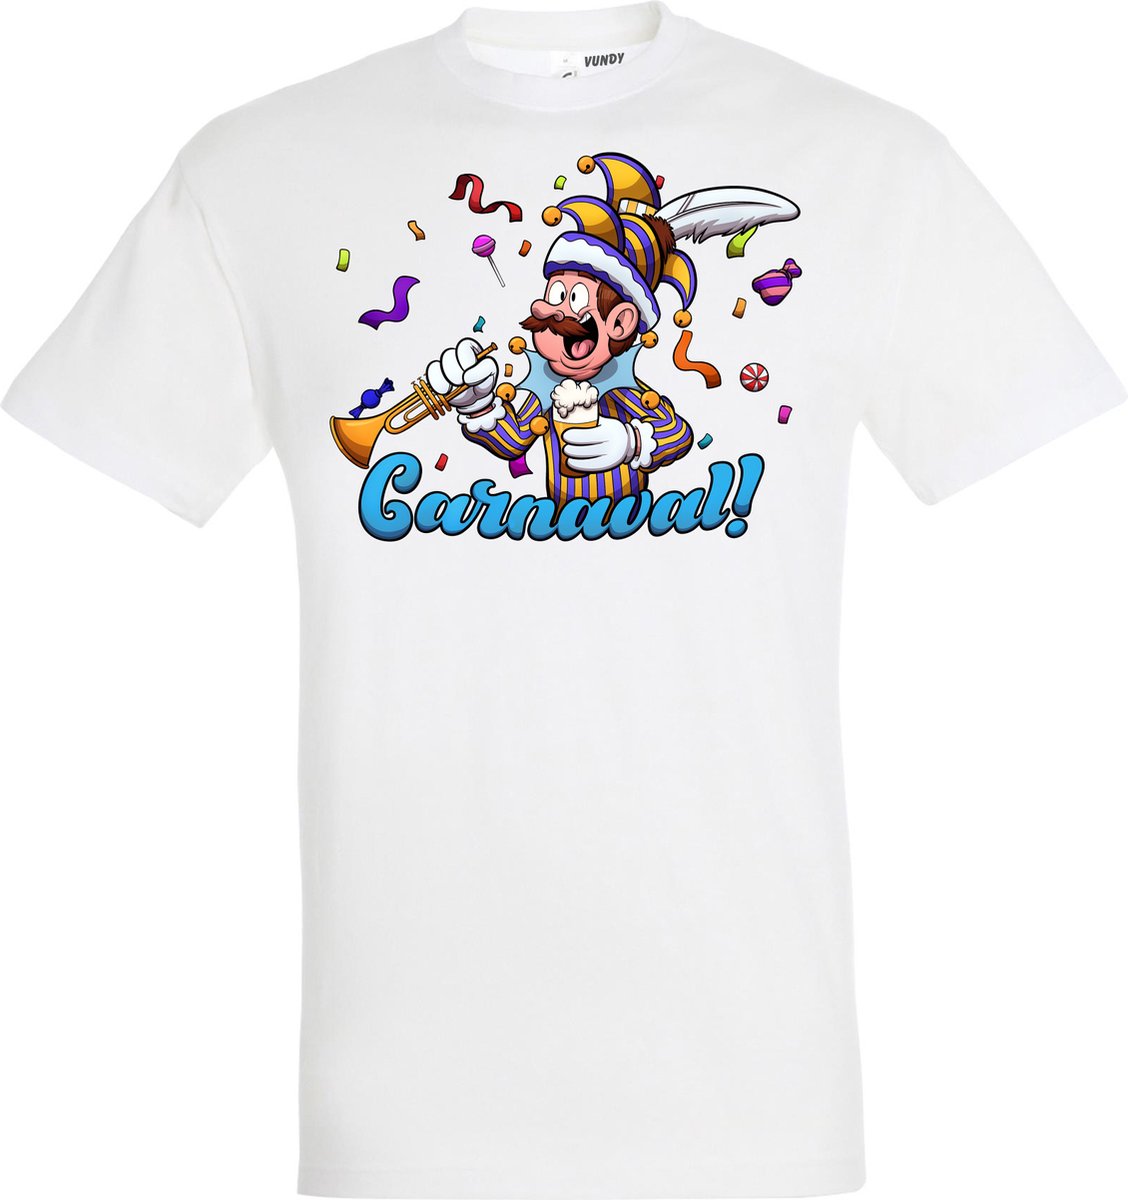 T-shirt Carnavalluh | Carnaval | Carnavalskleding Dames Heren | Wit | maat XS